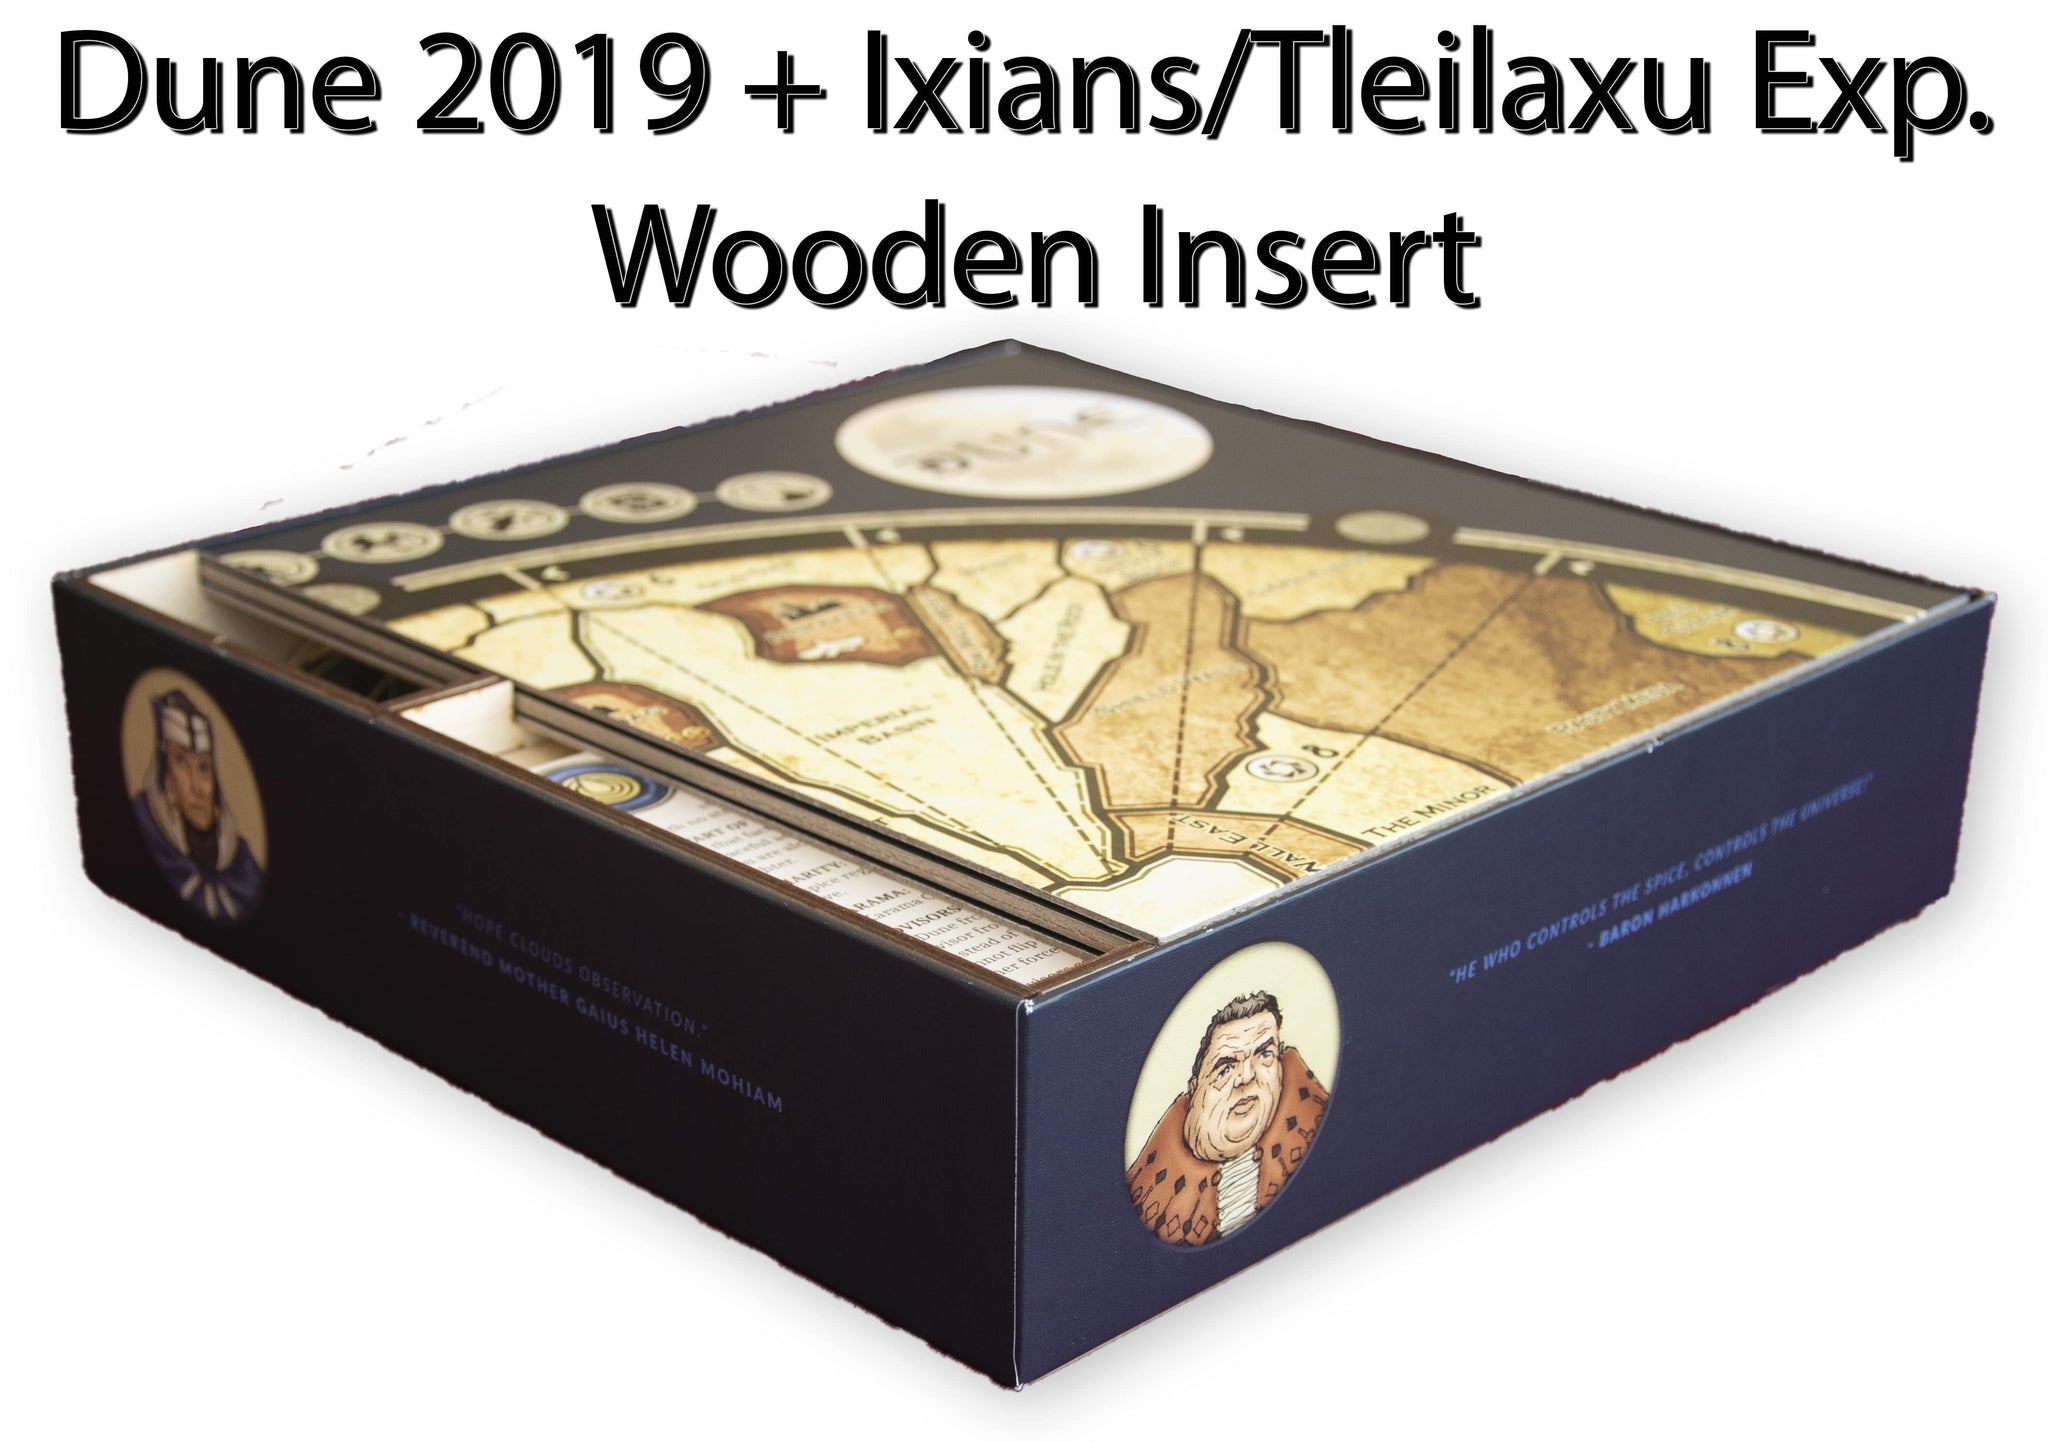 Dune 2019 + Ixians/Tleilaxu Expansion Wooden Insert/Organizer - The Nifty Organizer